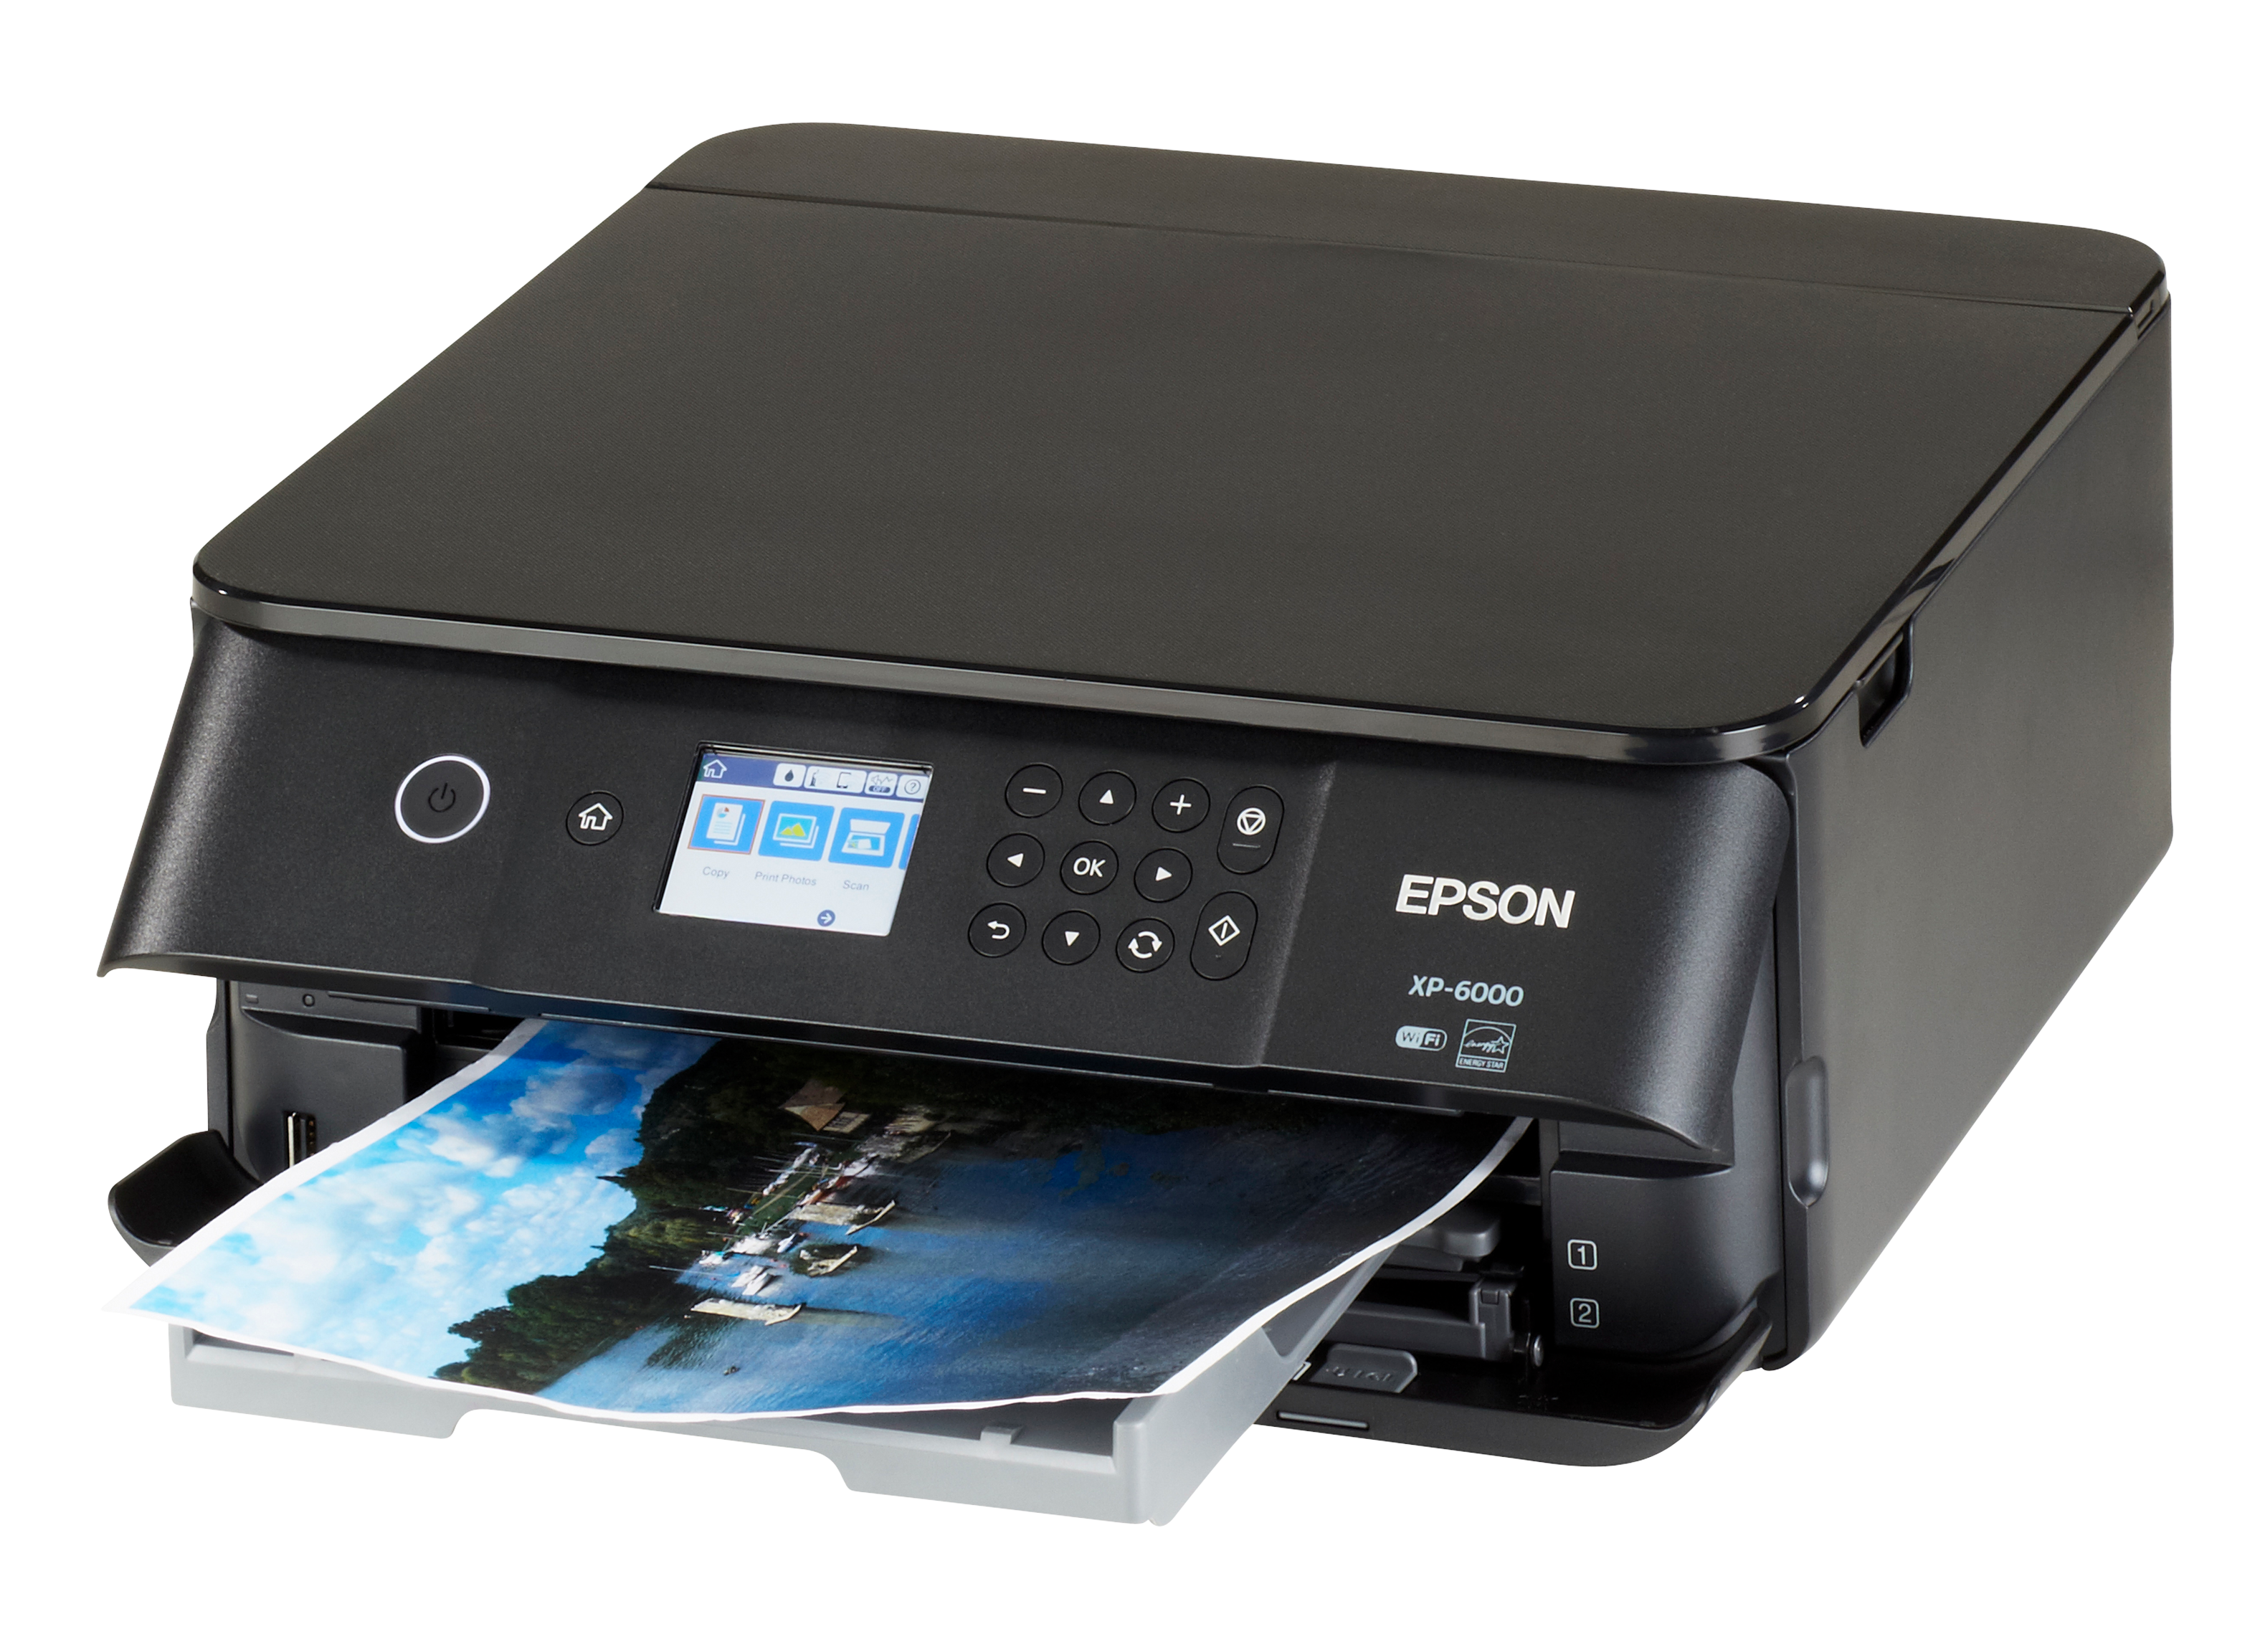 Epson Expression Premium XP-6000 Printer - Consumer Reports